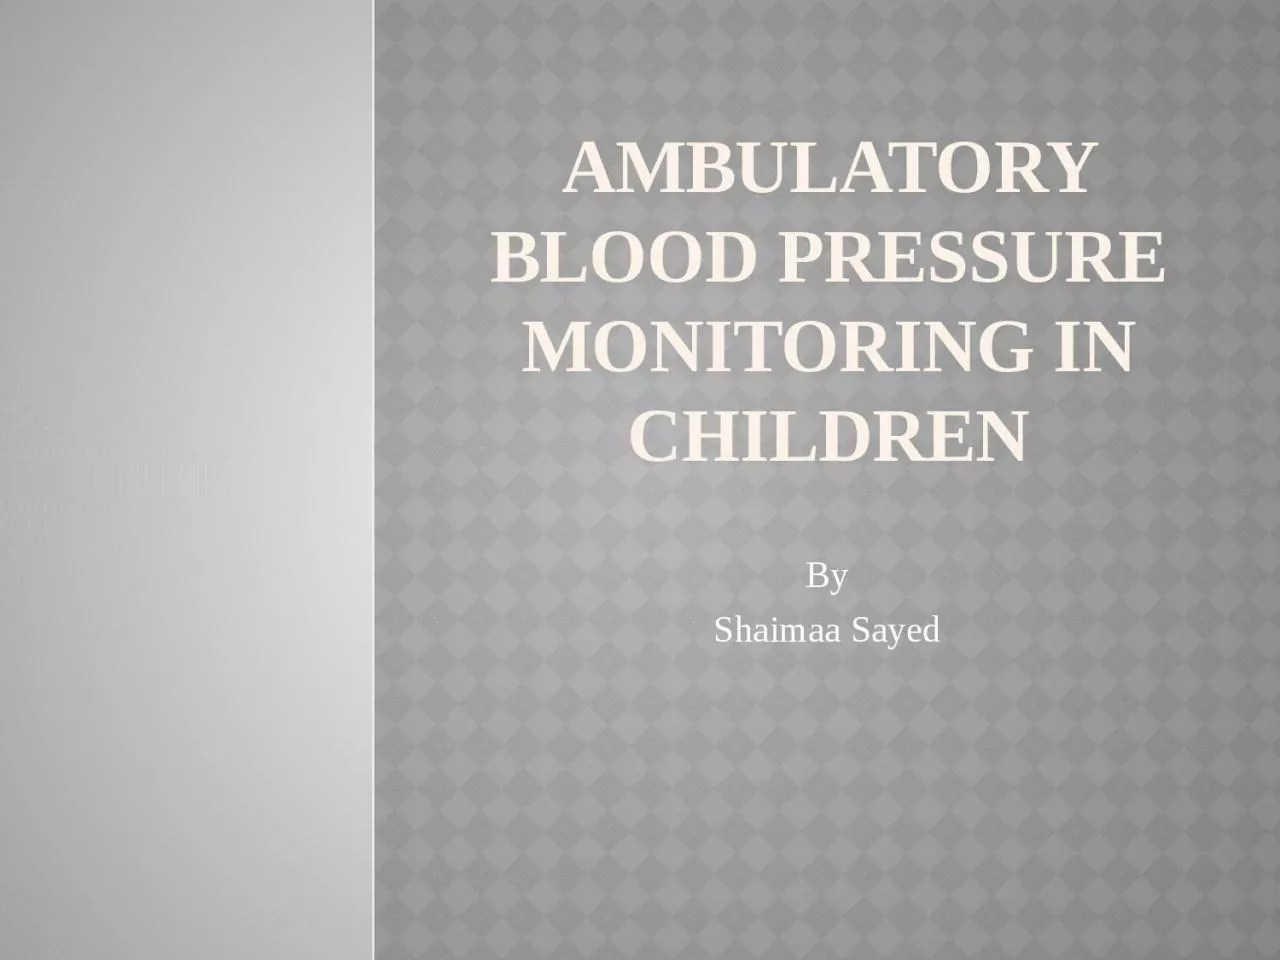 Ambulatory blood pressure monitoring in children